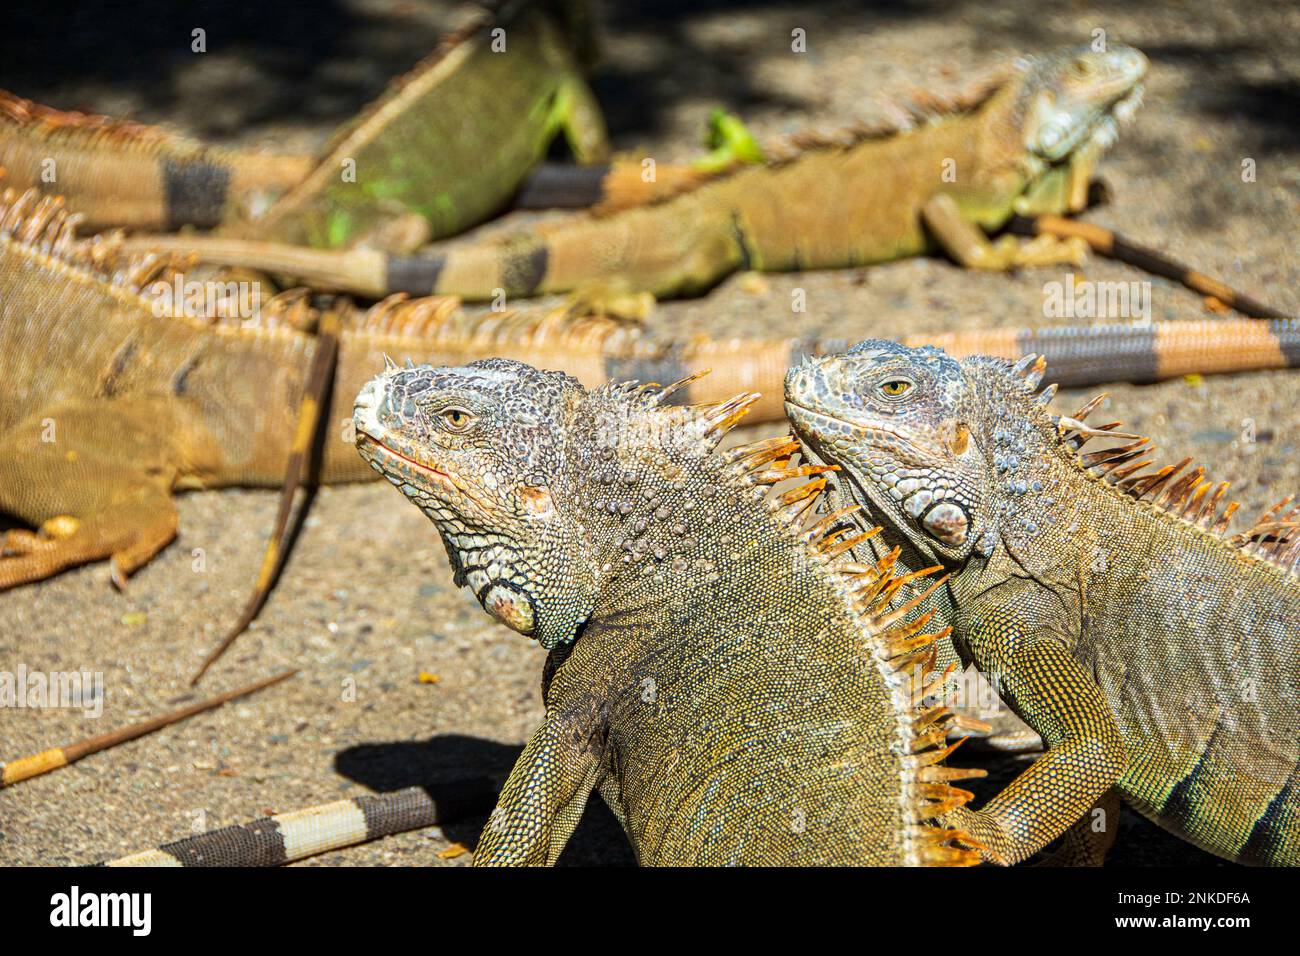 Two iguanas getting some sun at the Arch's Marine Park, Roatan, Honduras. Stock Photo